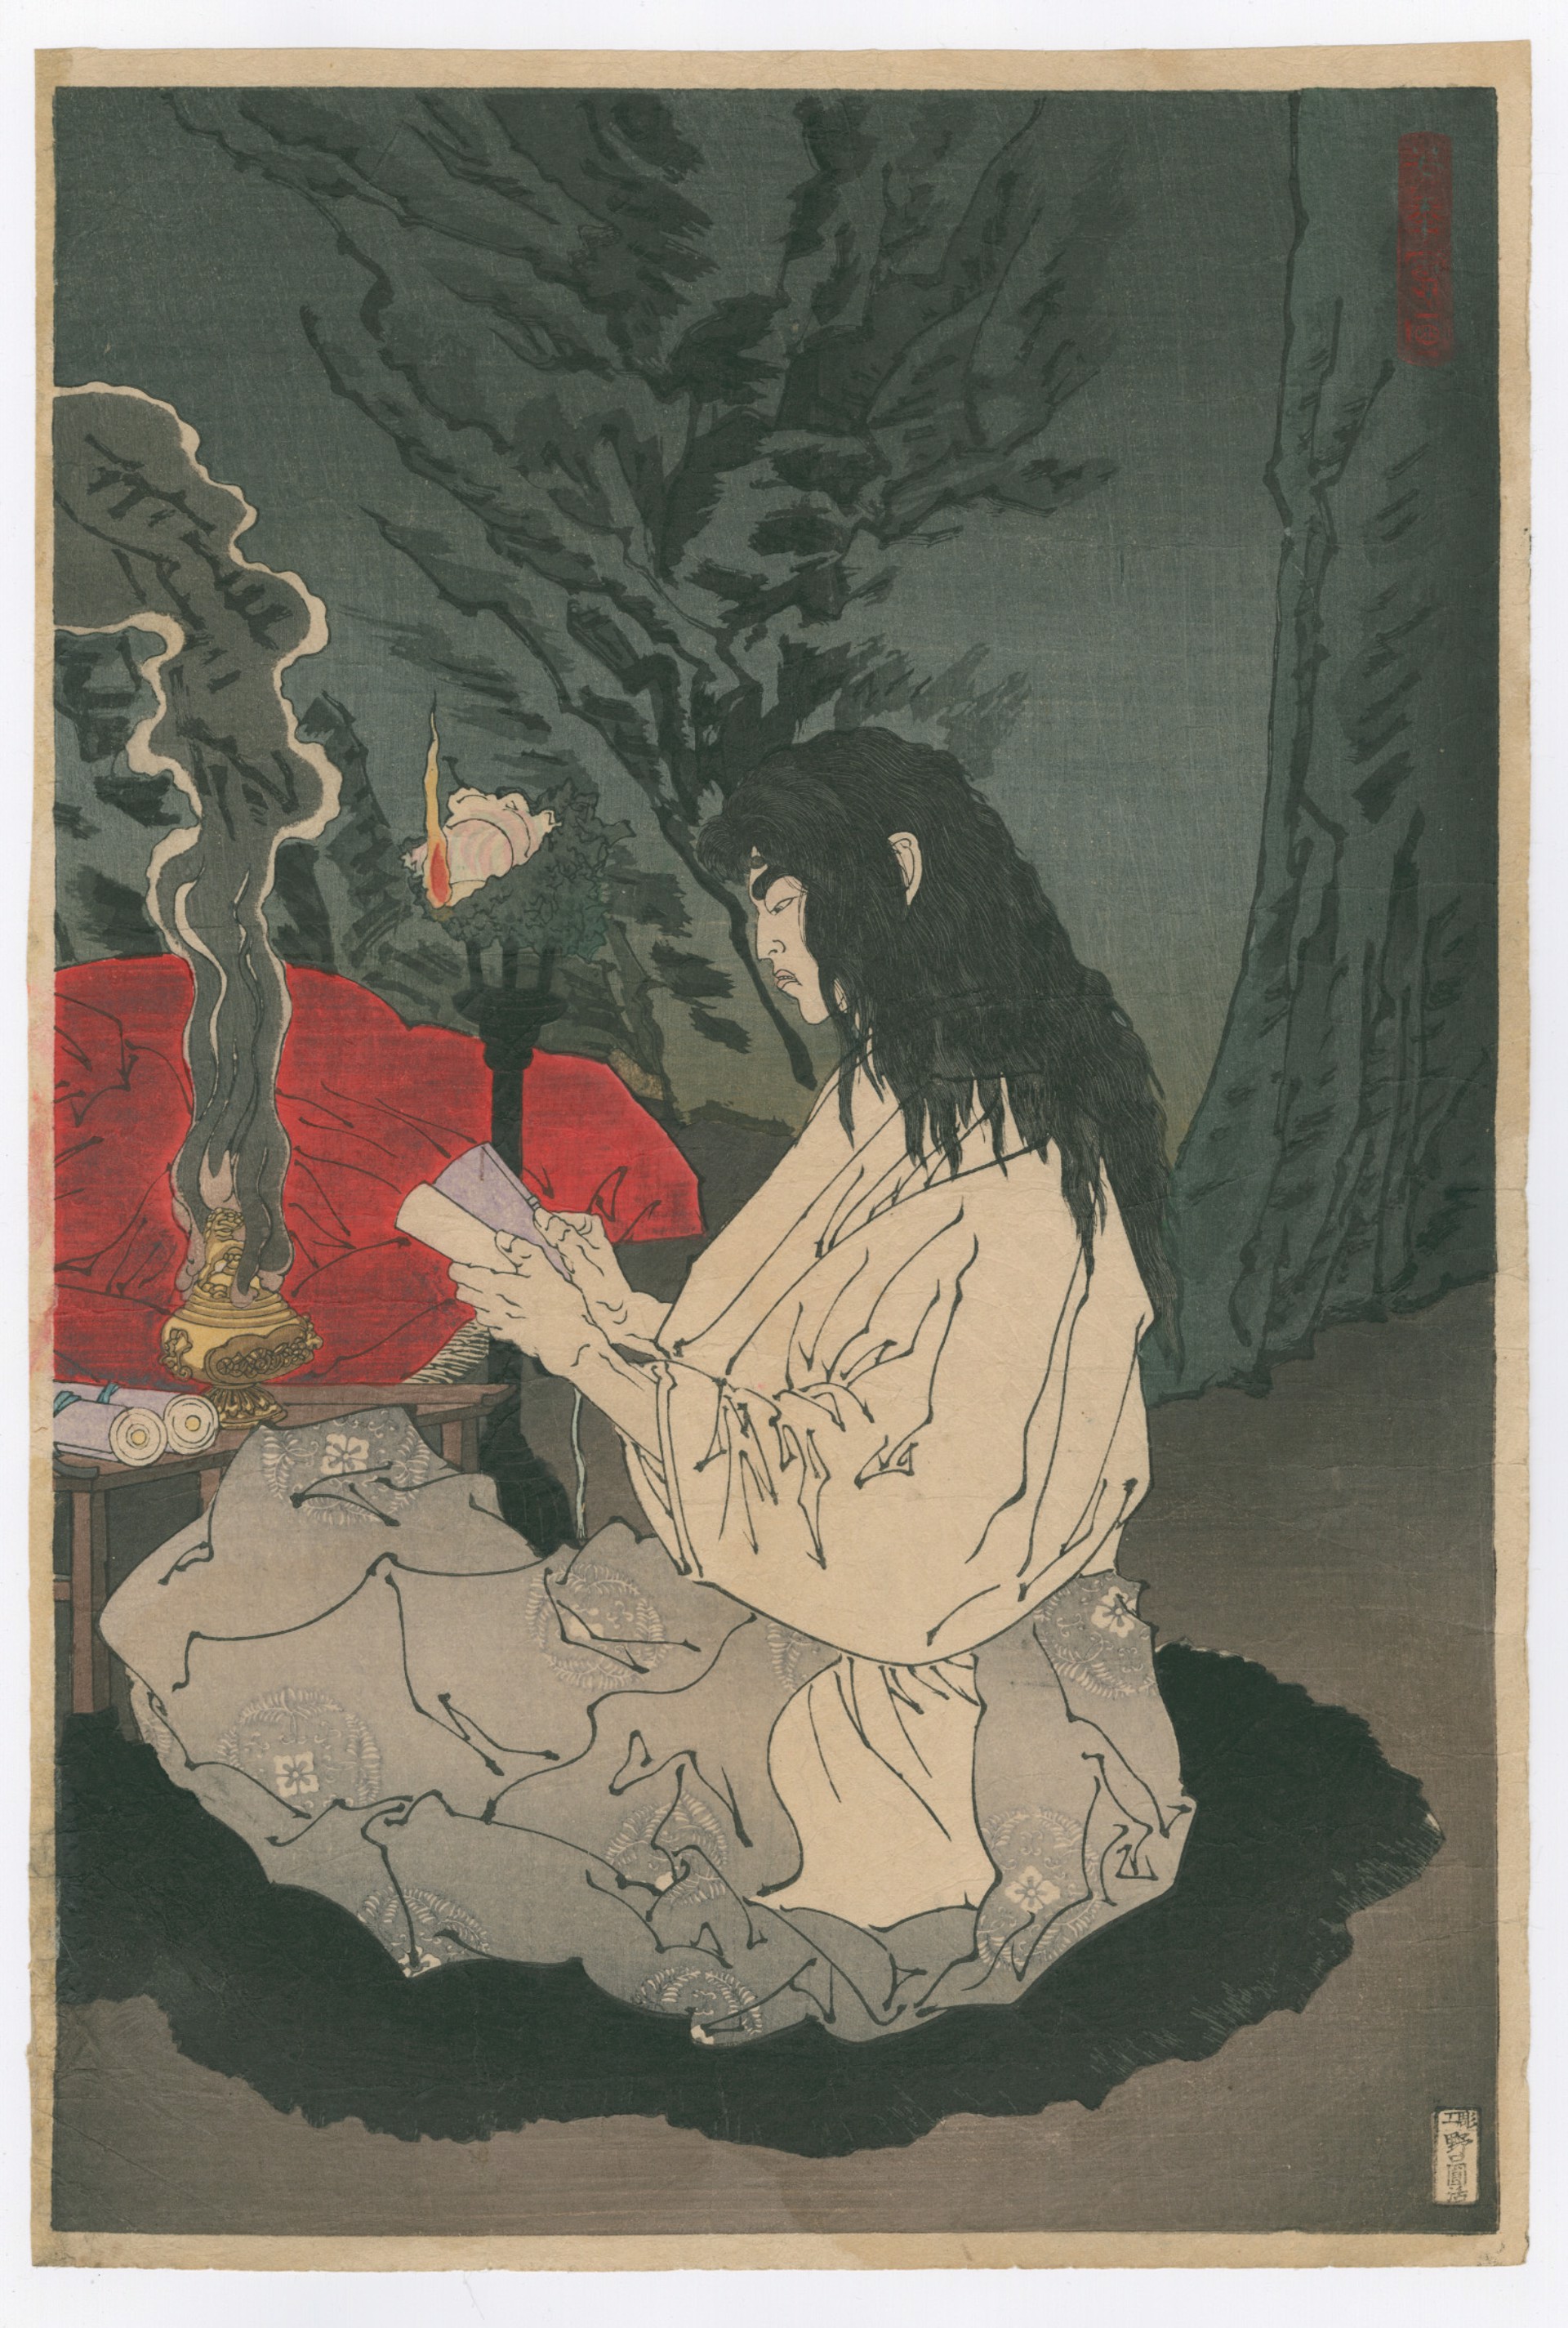 Picture of Daito no Miya, Prince Morinaga, 3rd son of Emperor Go-Daigo Reading the Lotus Sutra While Imprisoned at Kamakura Sketches by Yoshitoshi by Yoshitoshi